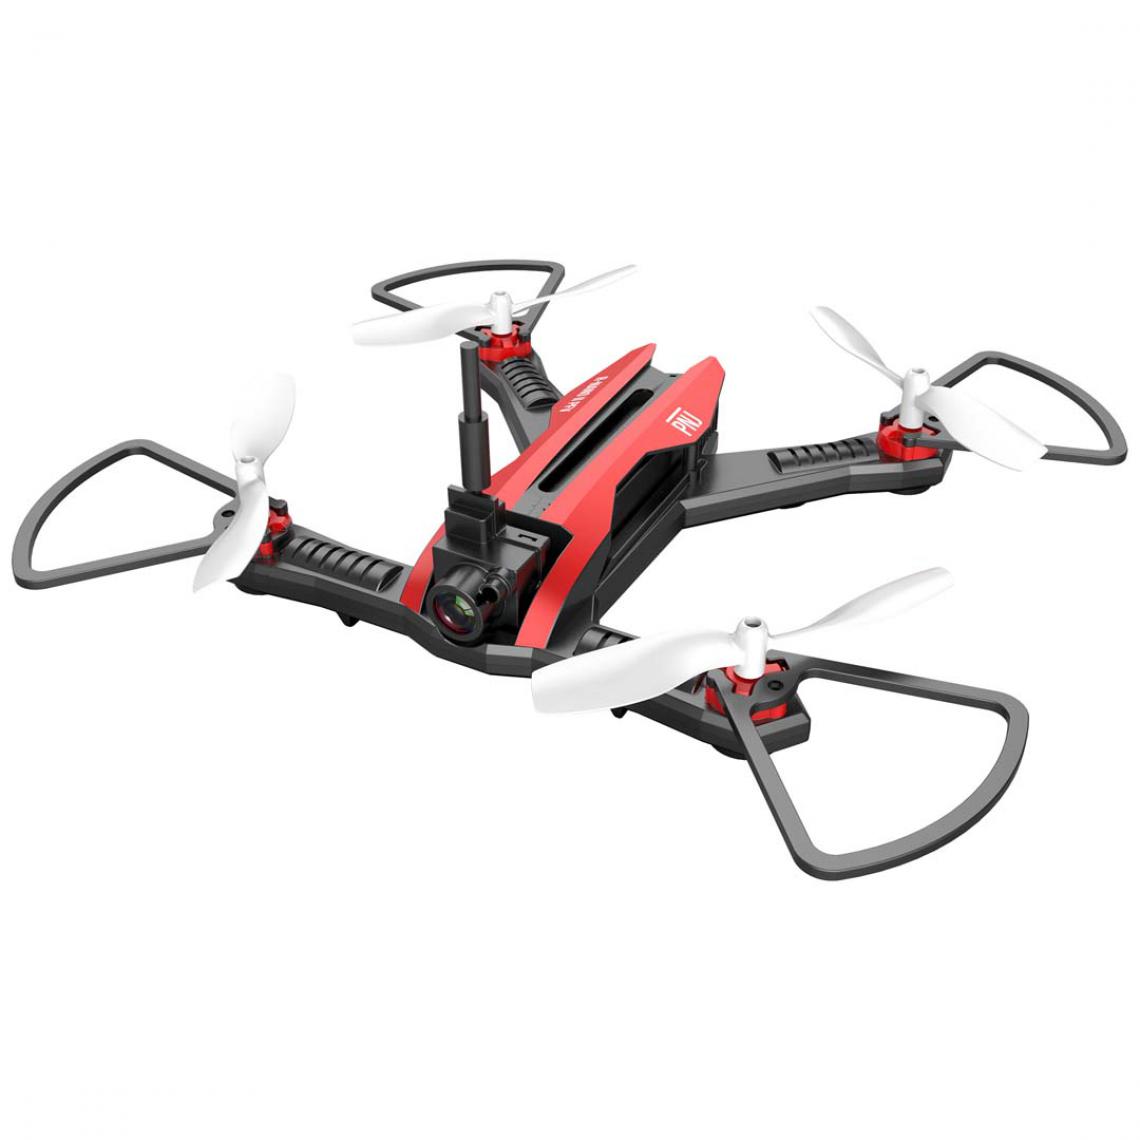 Pnj - Mini drone de course connecté R-NANO II compatible FPV - Drone connecté